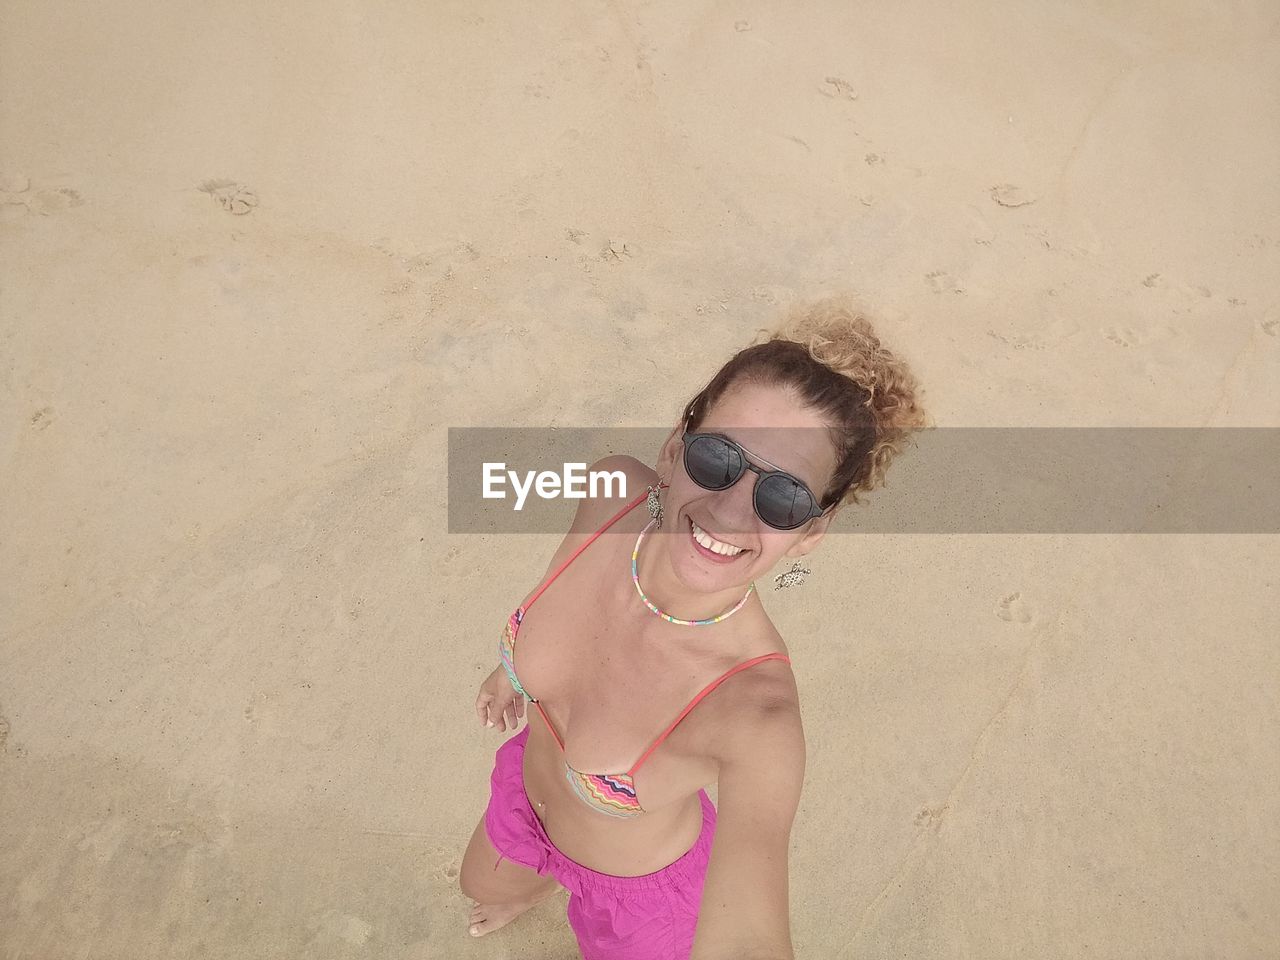 Portrait of woman wearing sunglasses standing on beach